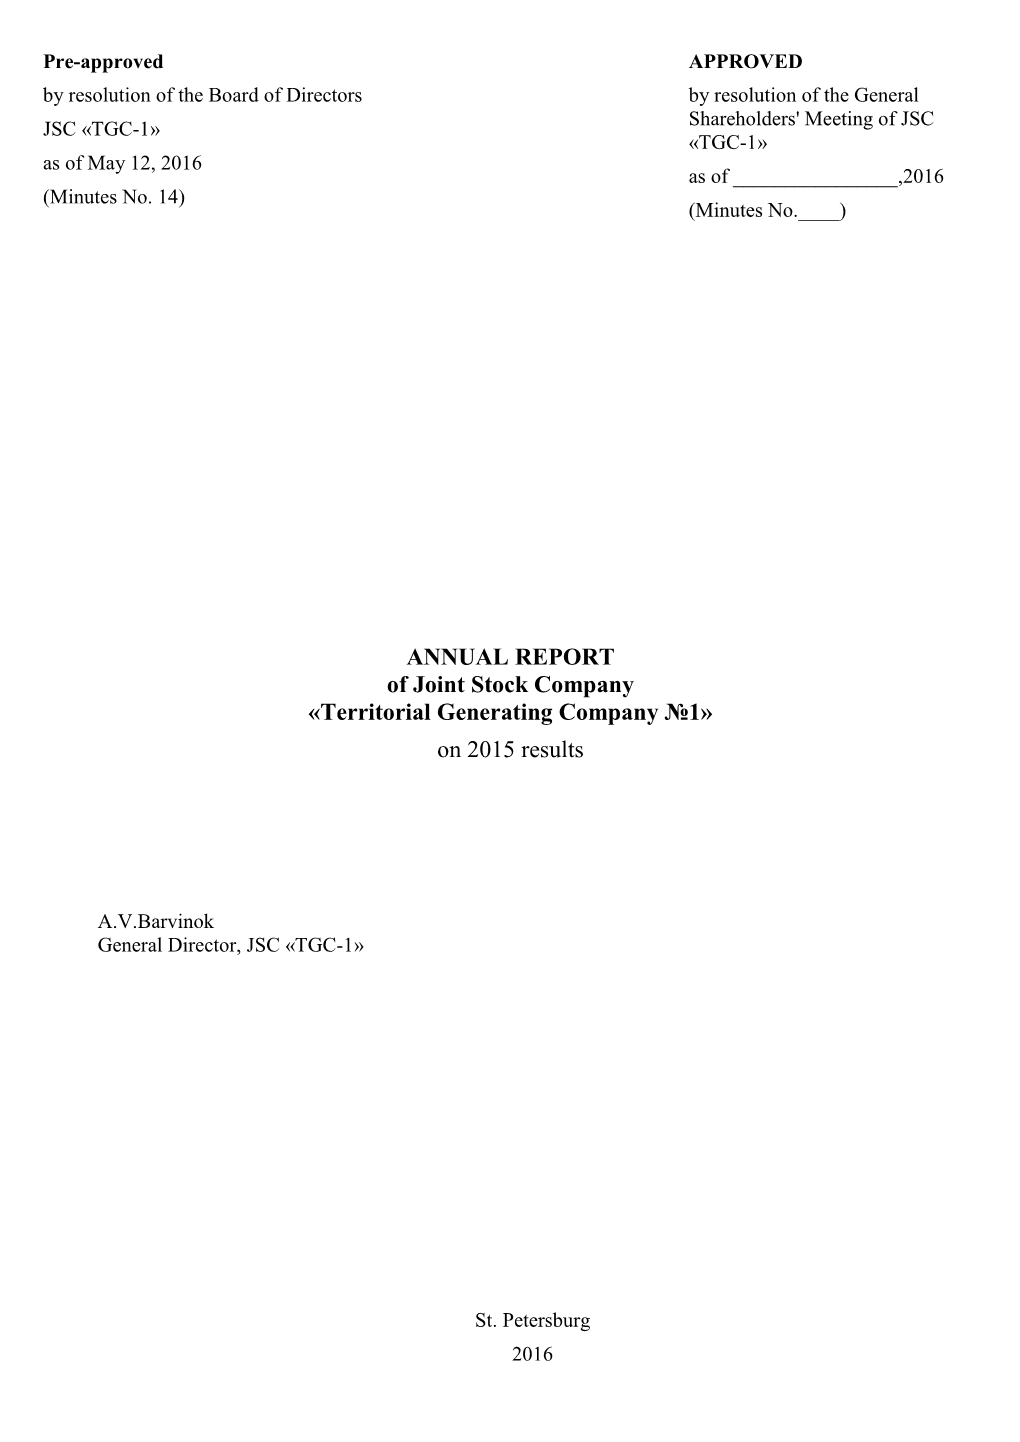 JSC TGC-1 Annual Report 2015